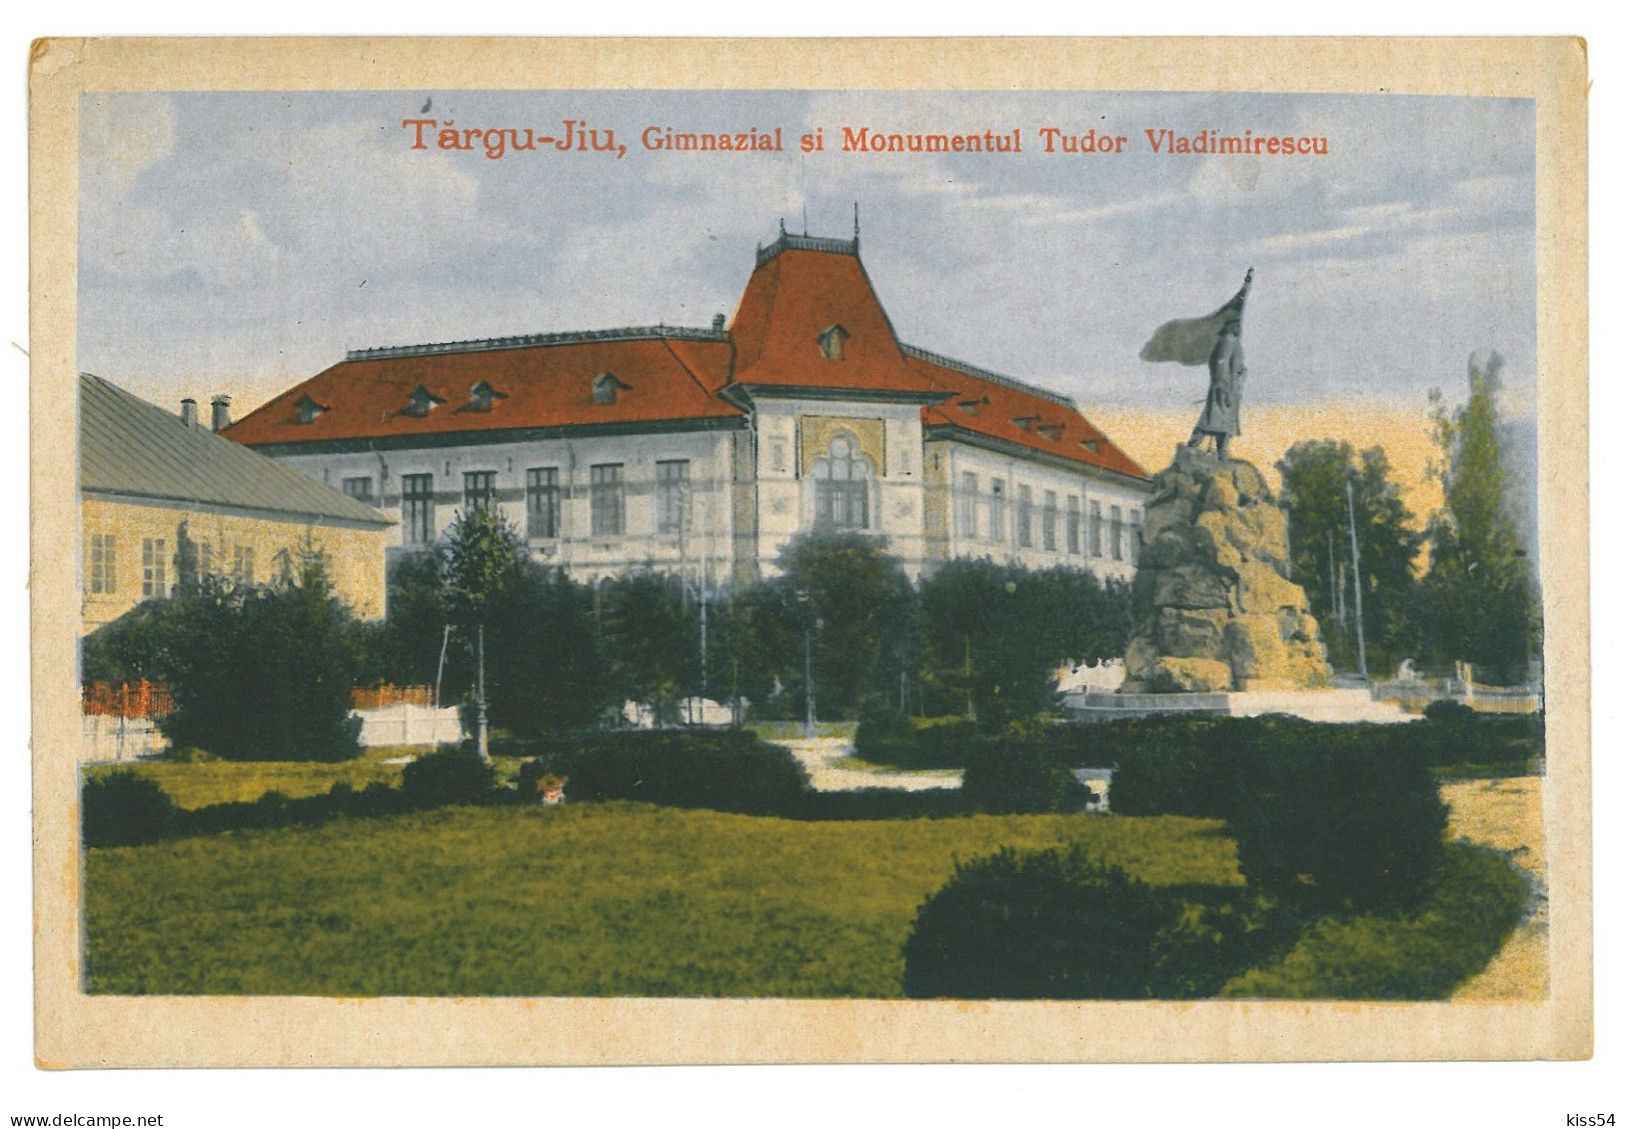 RO 83 - 20551 TARGU-JIU, School, Statue, Romania - Old Postcard - Used - 1917 - Romania